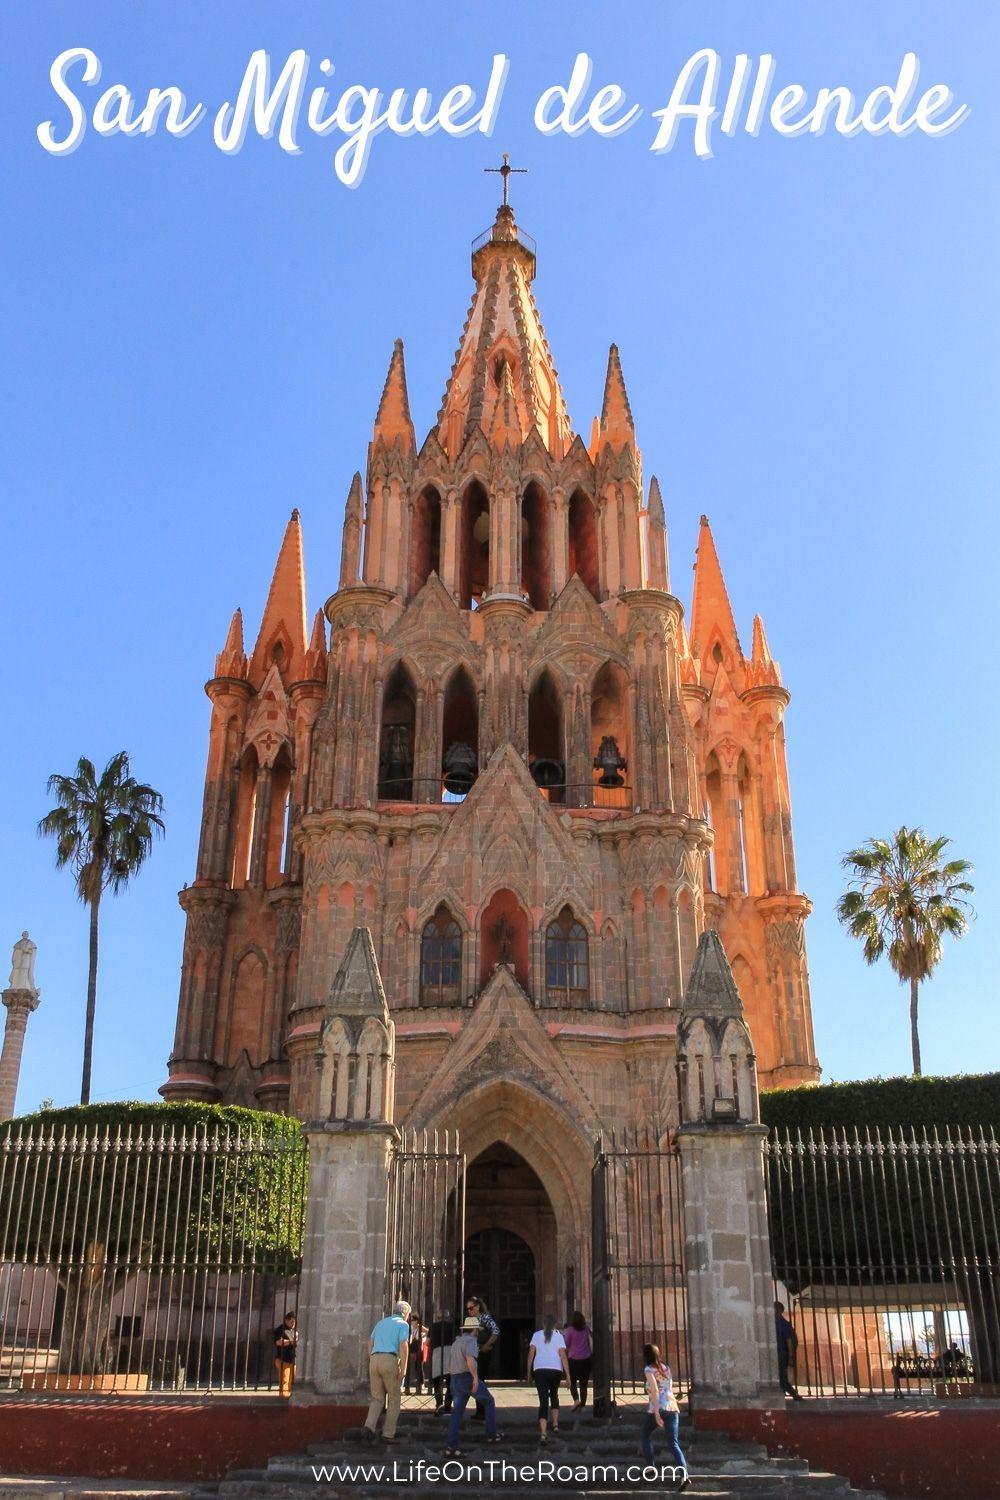 A neo-gothic style big church